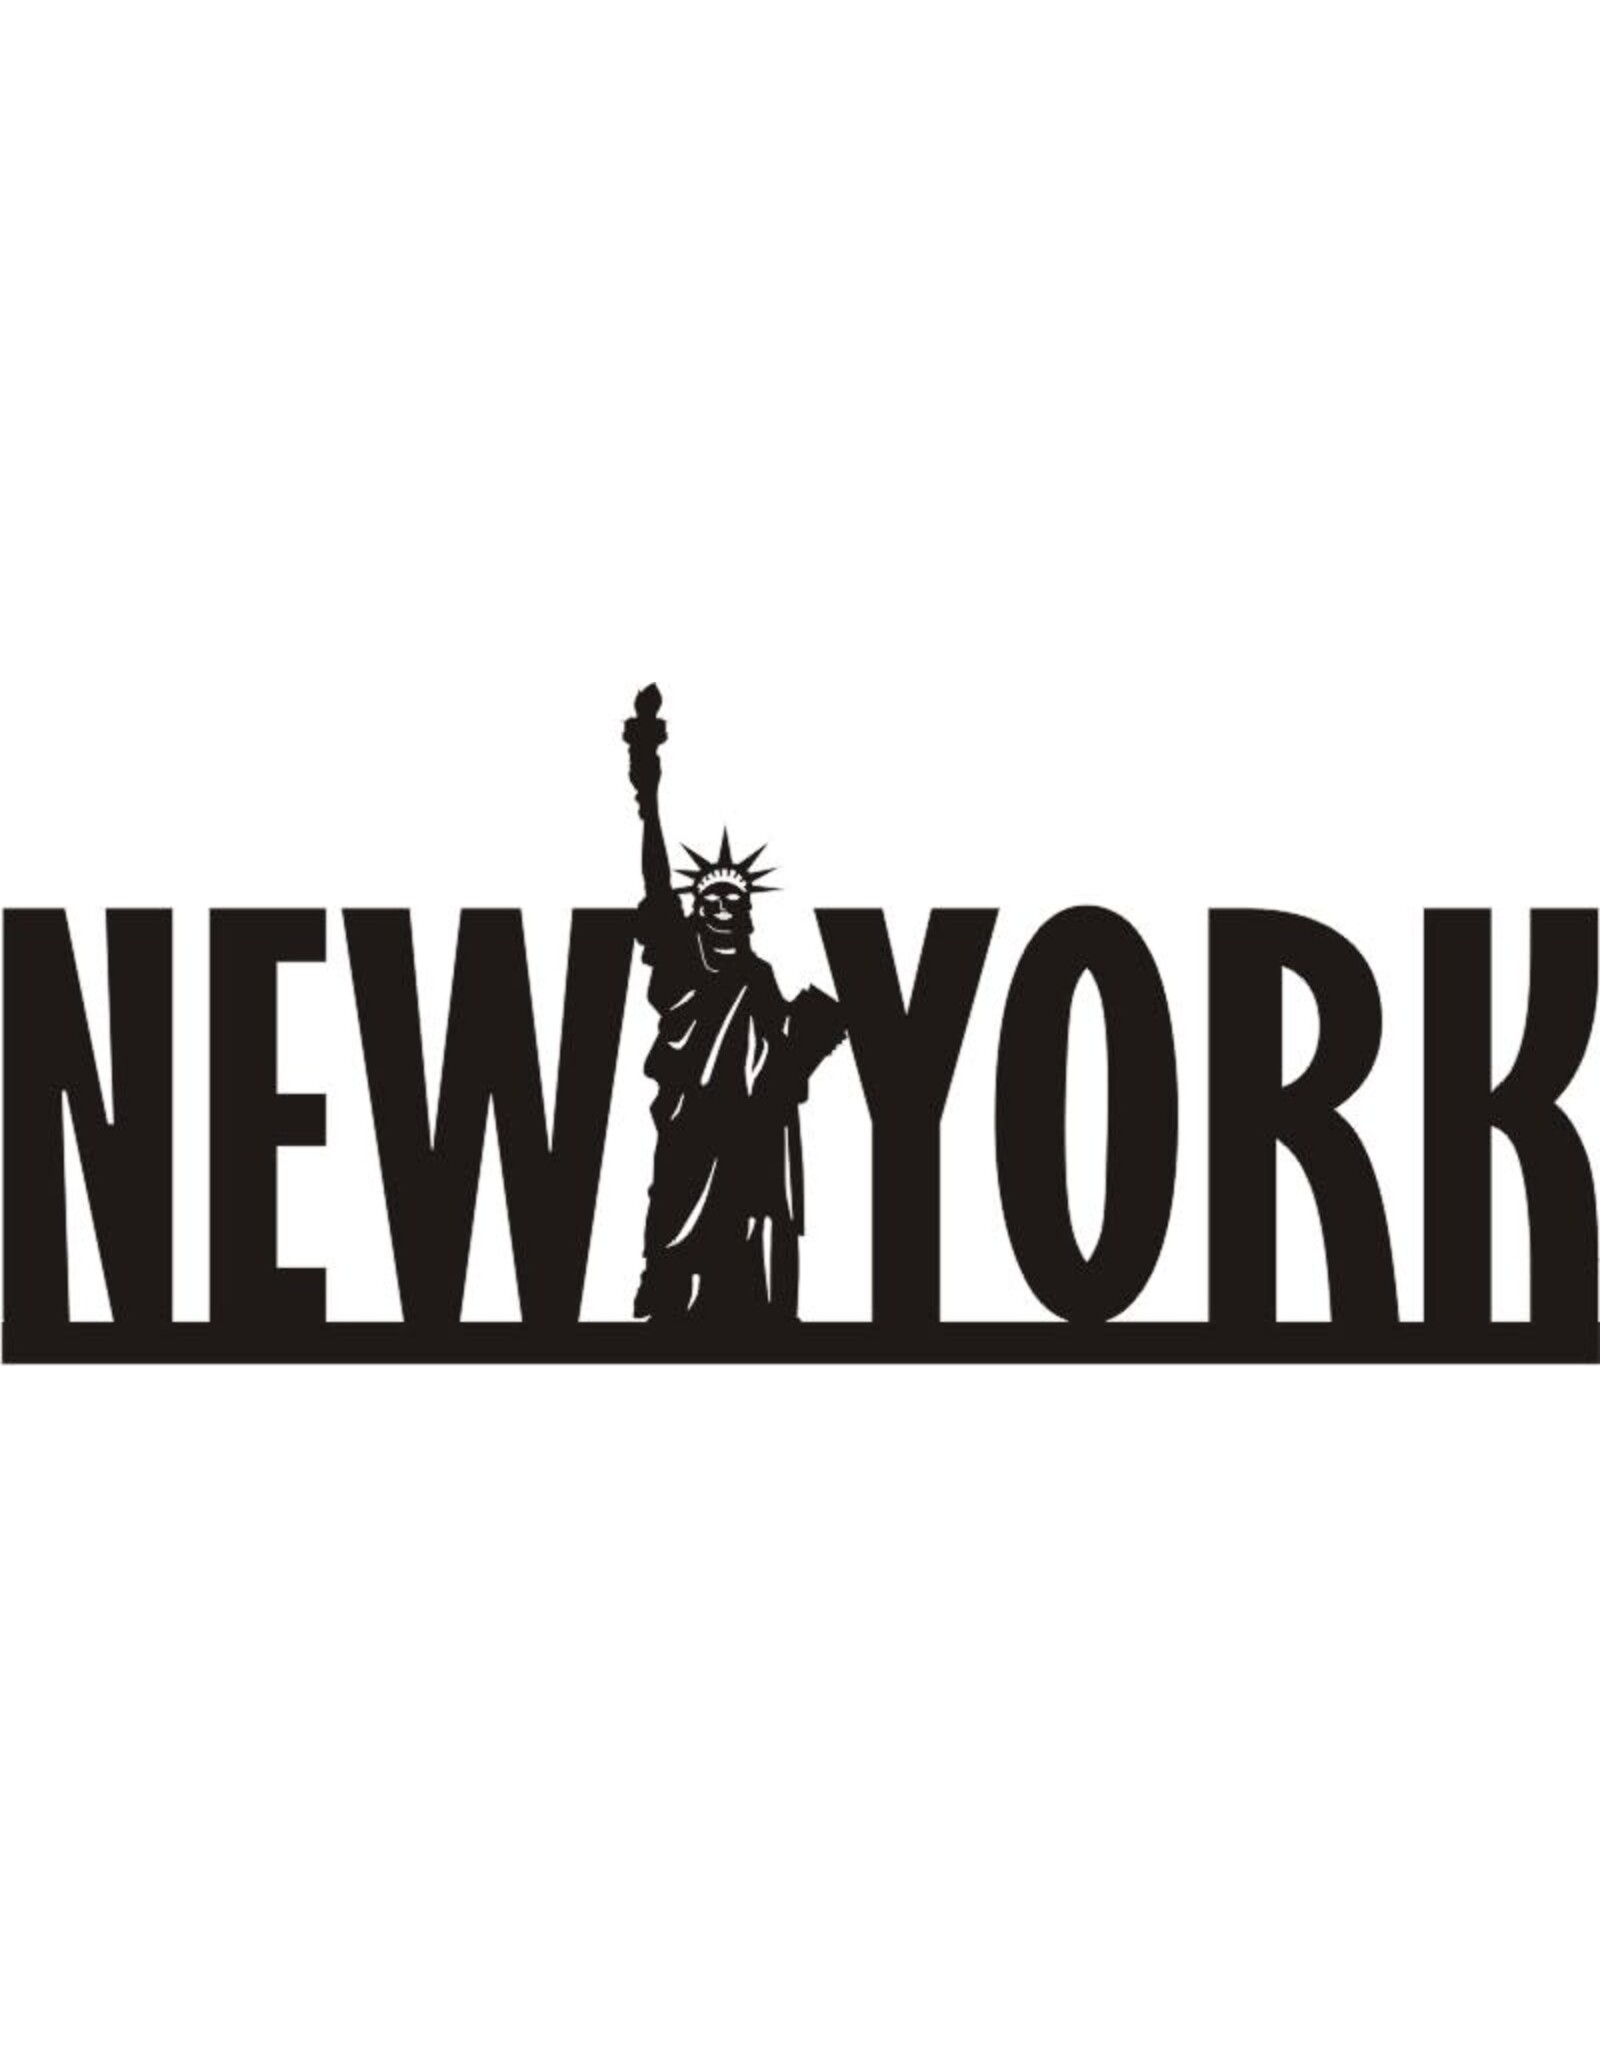 New York Banner